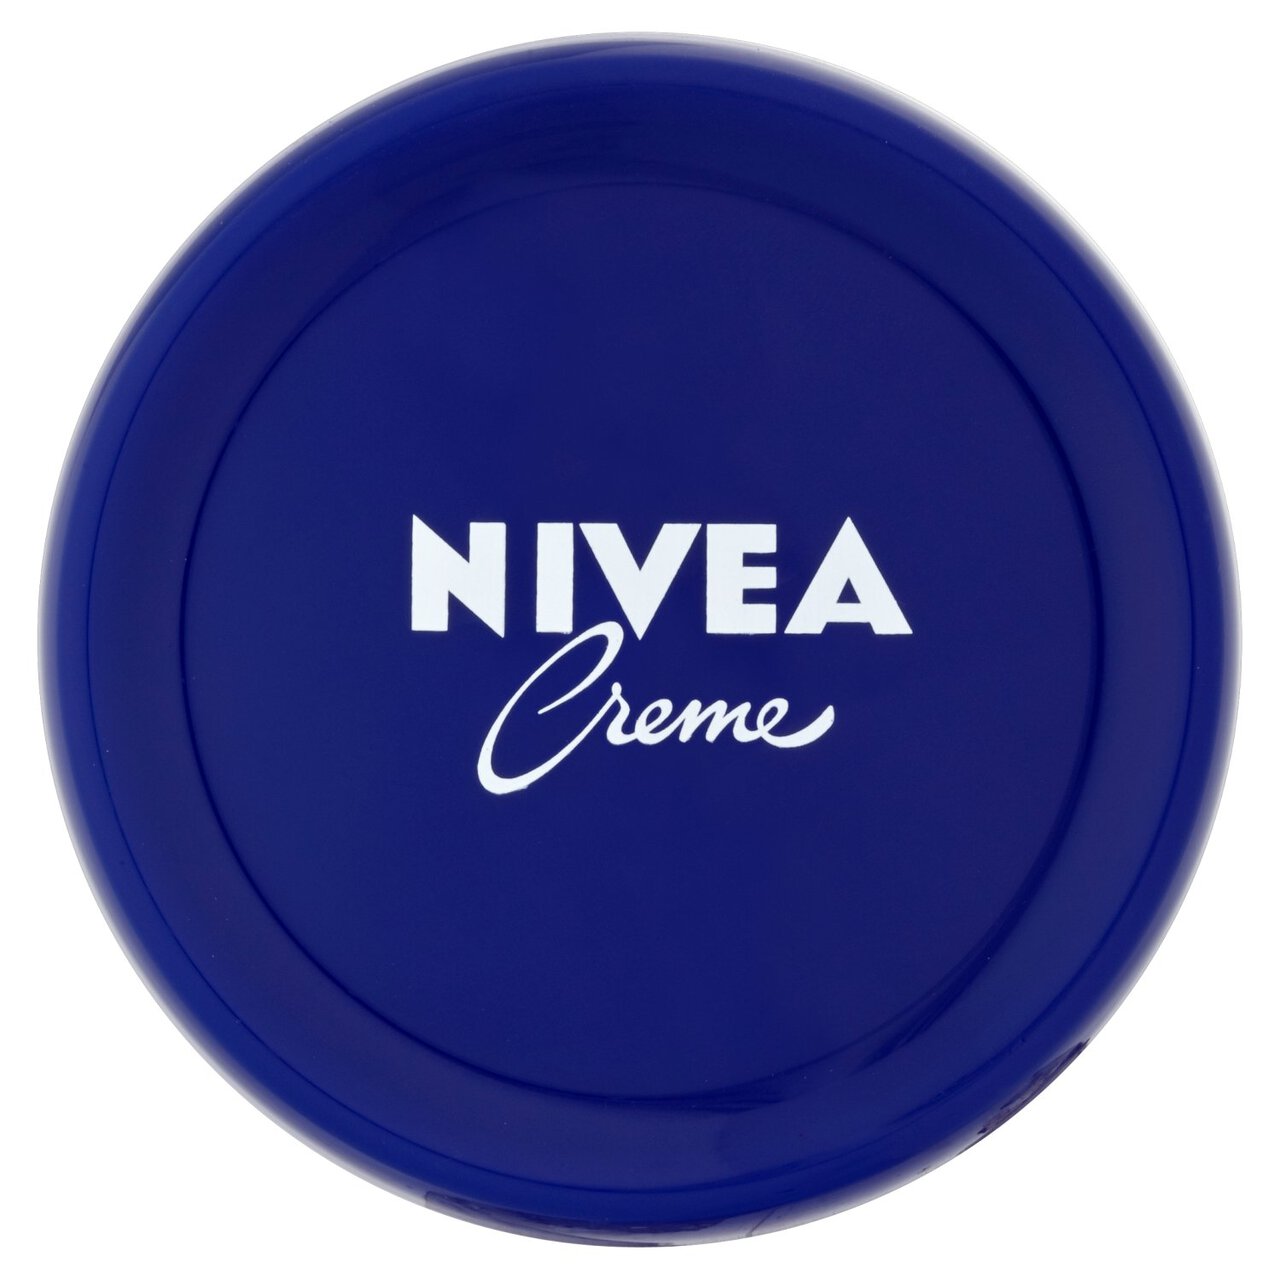 NIVEA Creme Moisturiser Cream for face, hands and body, 200ml 200ml